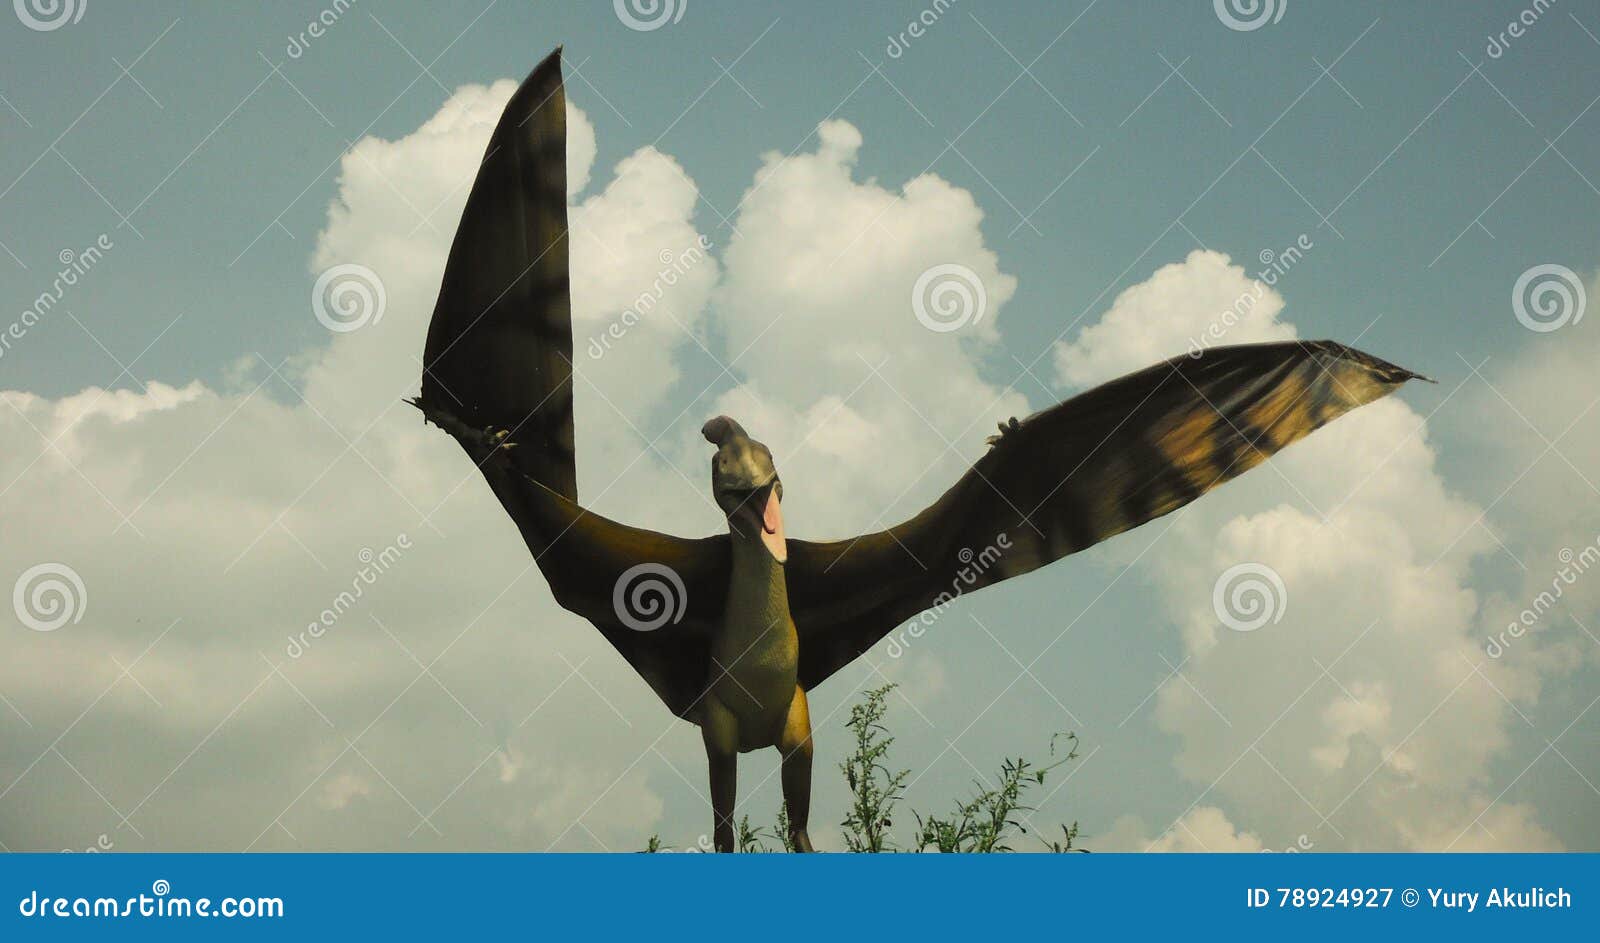 550 Pterodactyl Dinosaur Stock Photos - Free & Royalty-Free Stock Photos  from Dreamstime